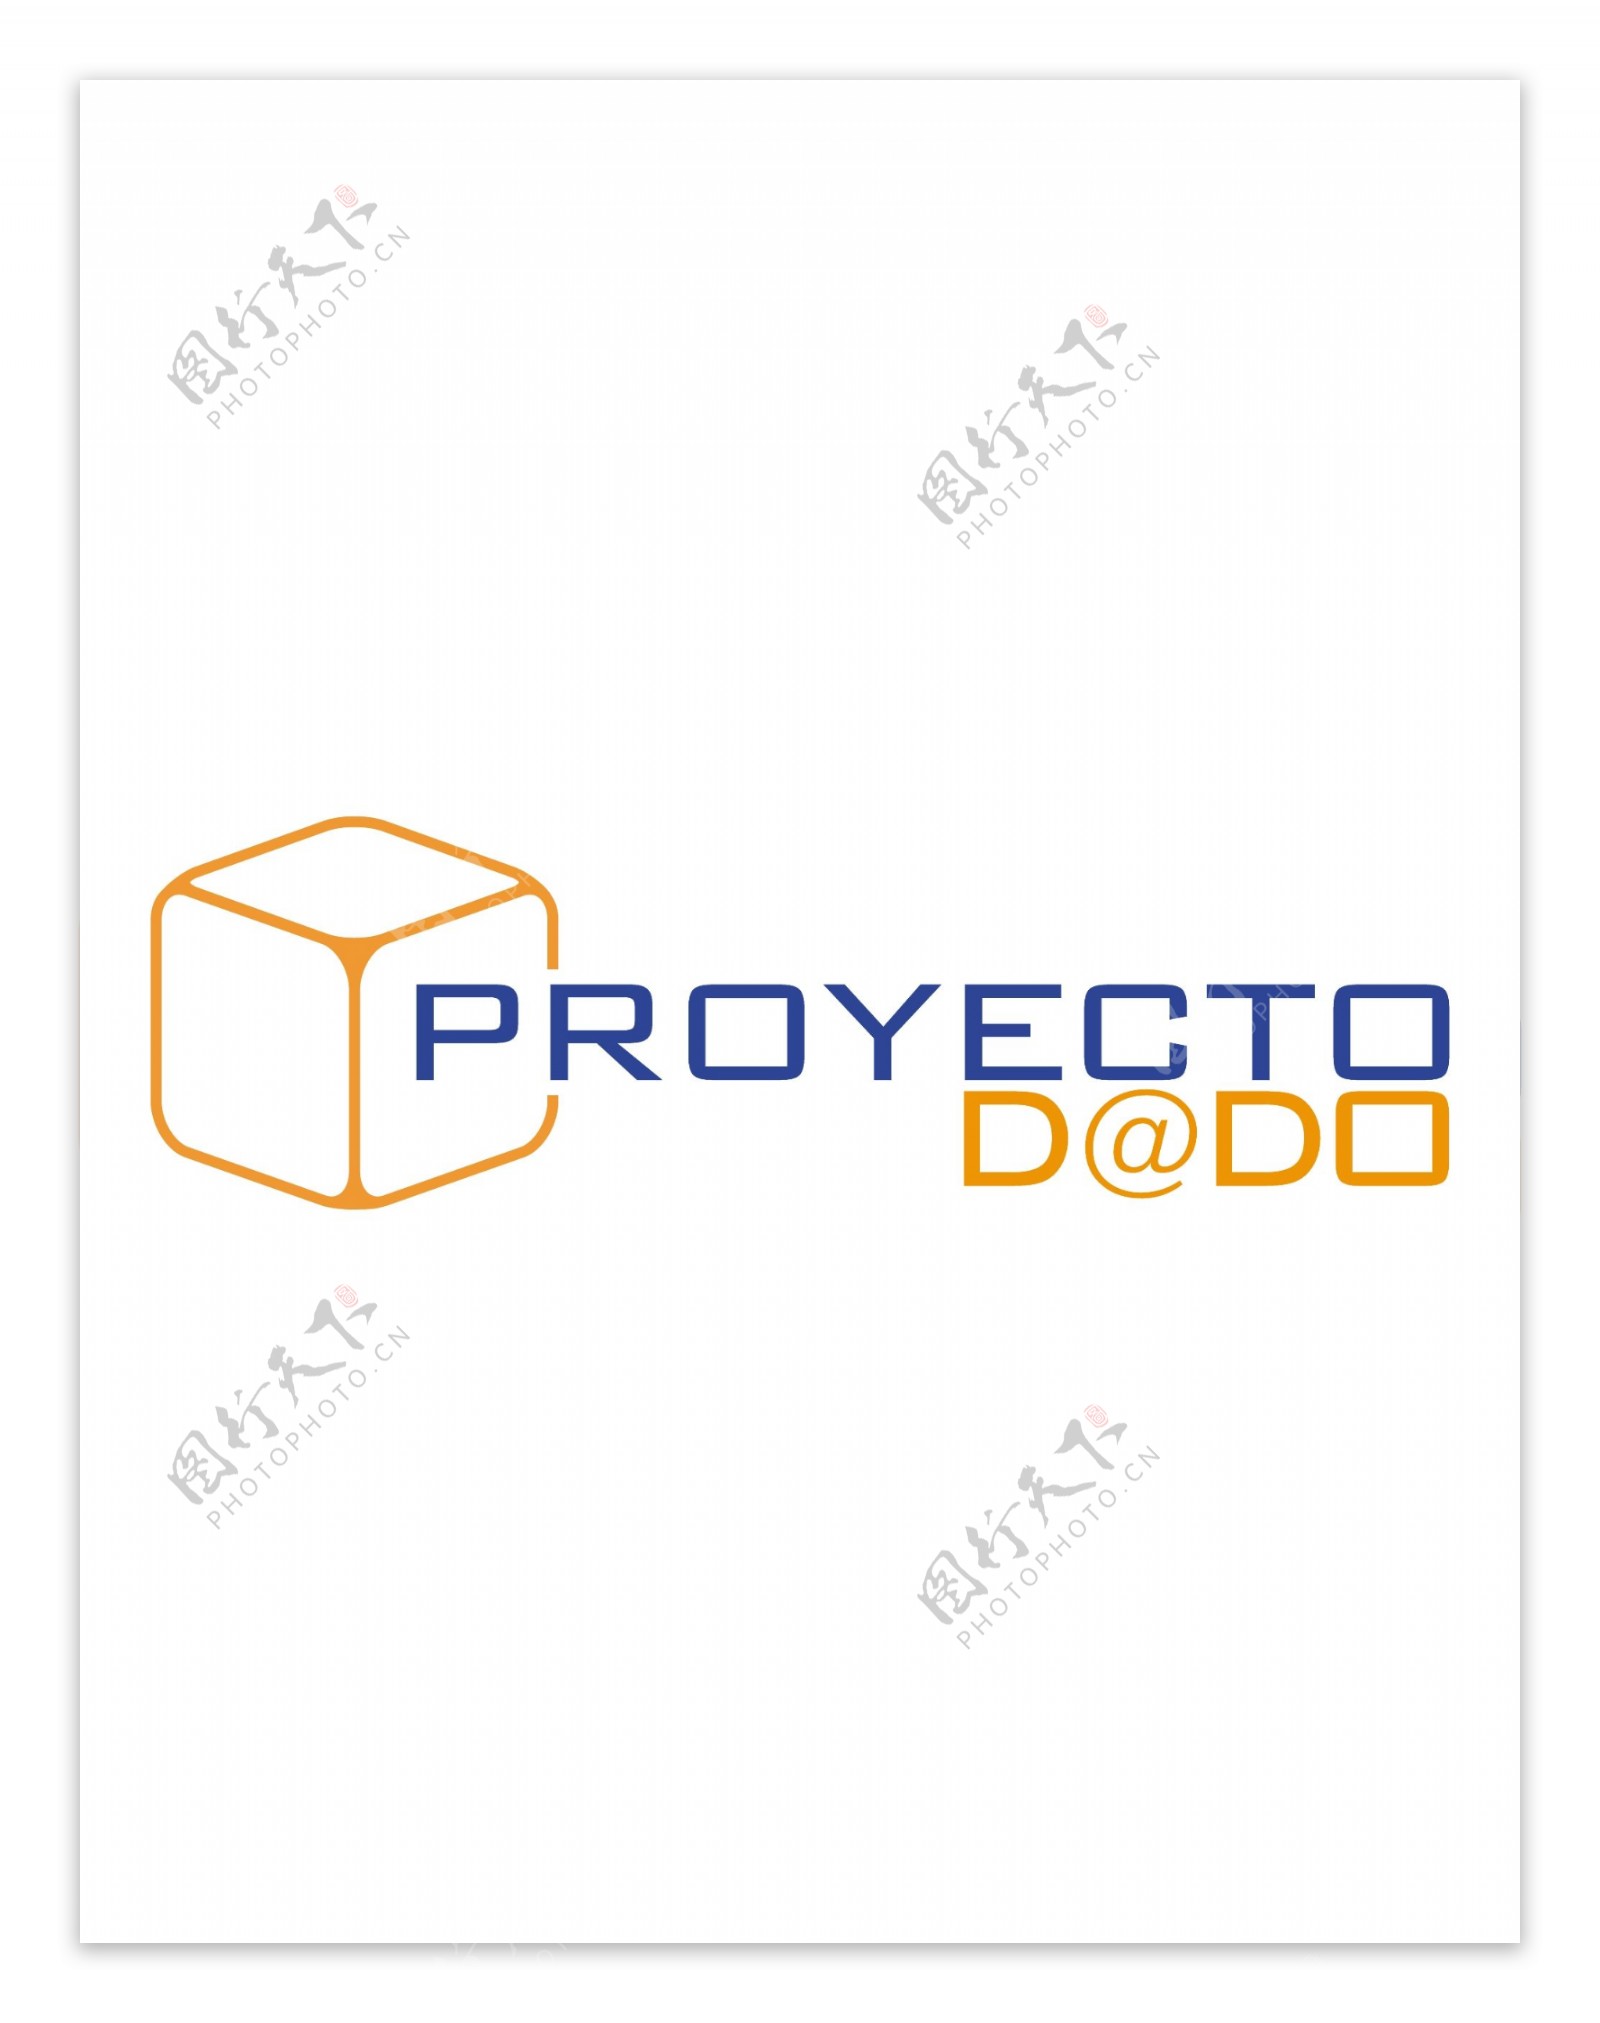 ProyectoDADOlogo设计欣赏ProyectoDADO软件公司LOGO下载标志设计欣赏